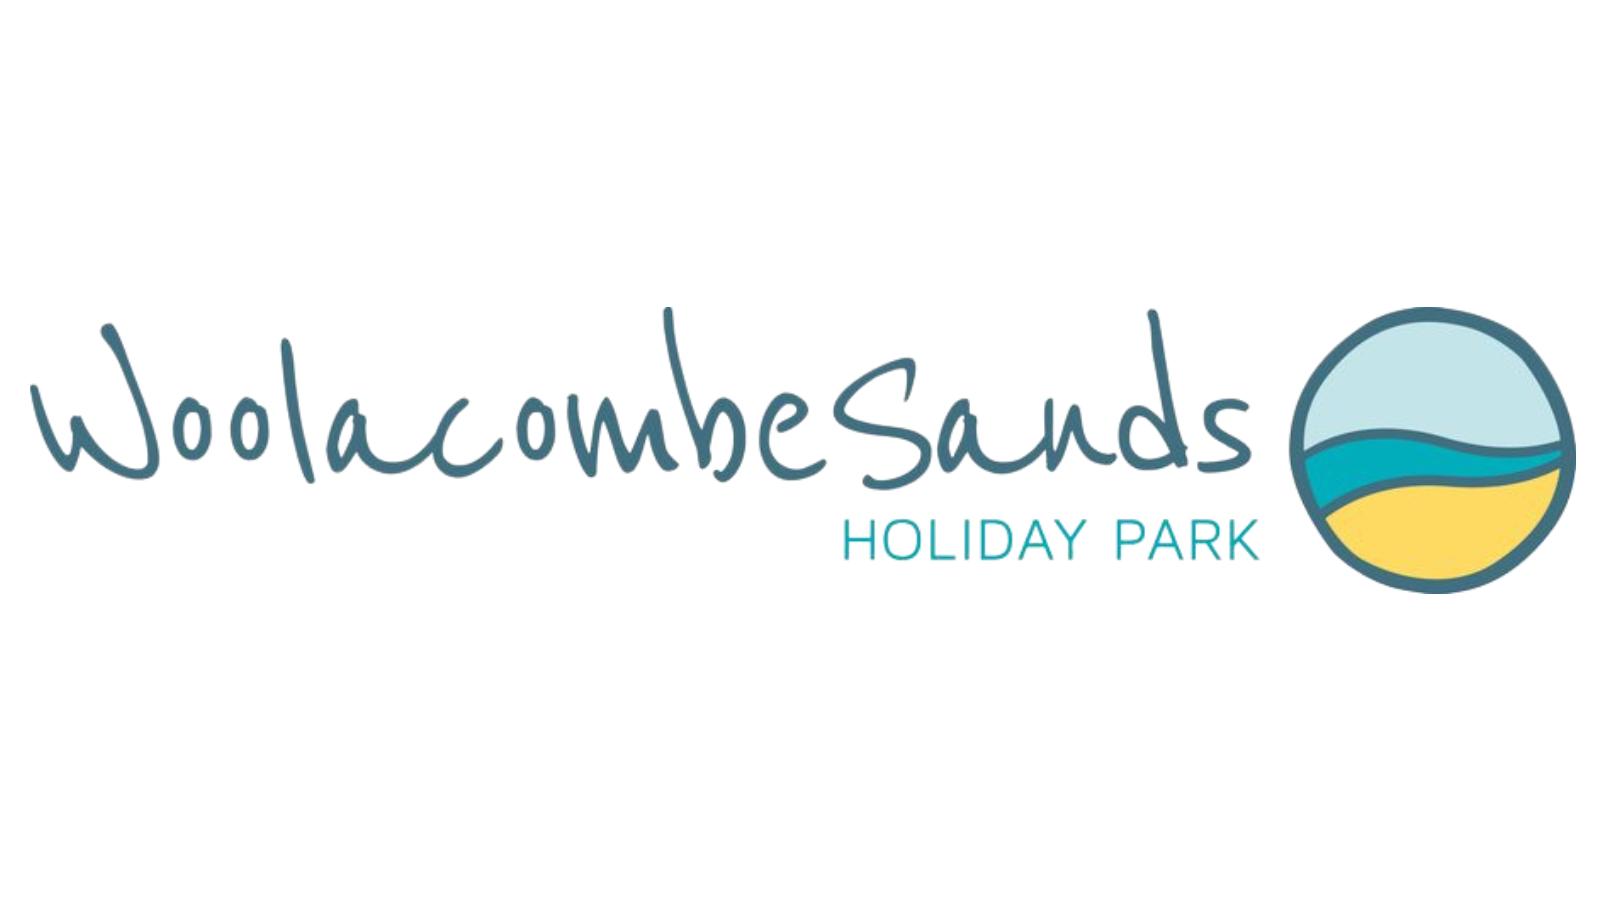 Woolacombe Sands Holiday Park logo